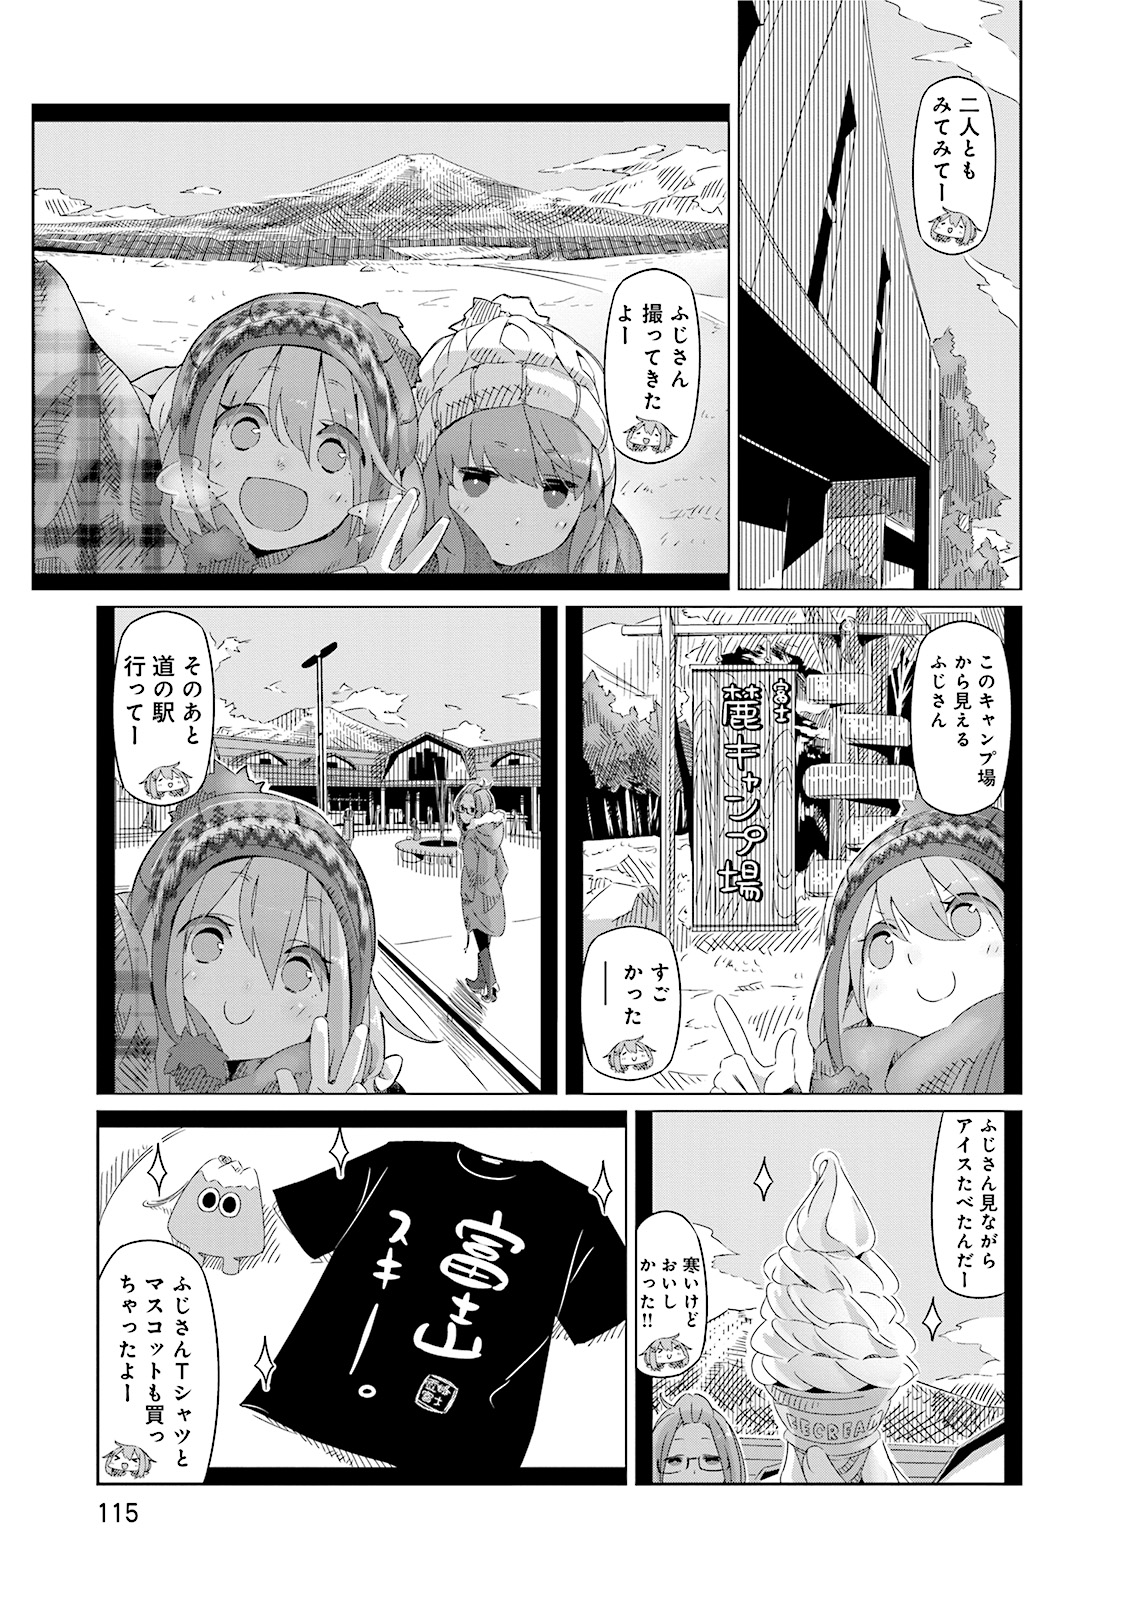 Yuru Camp - Chapter 5 - Page 1